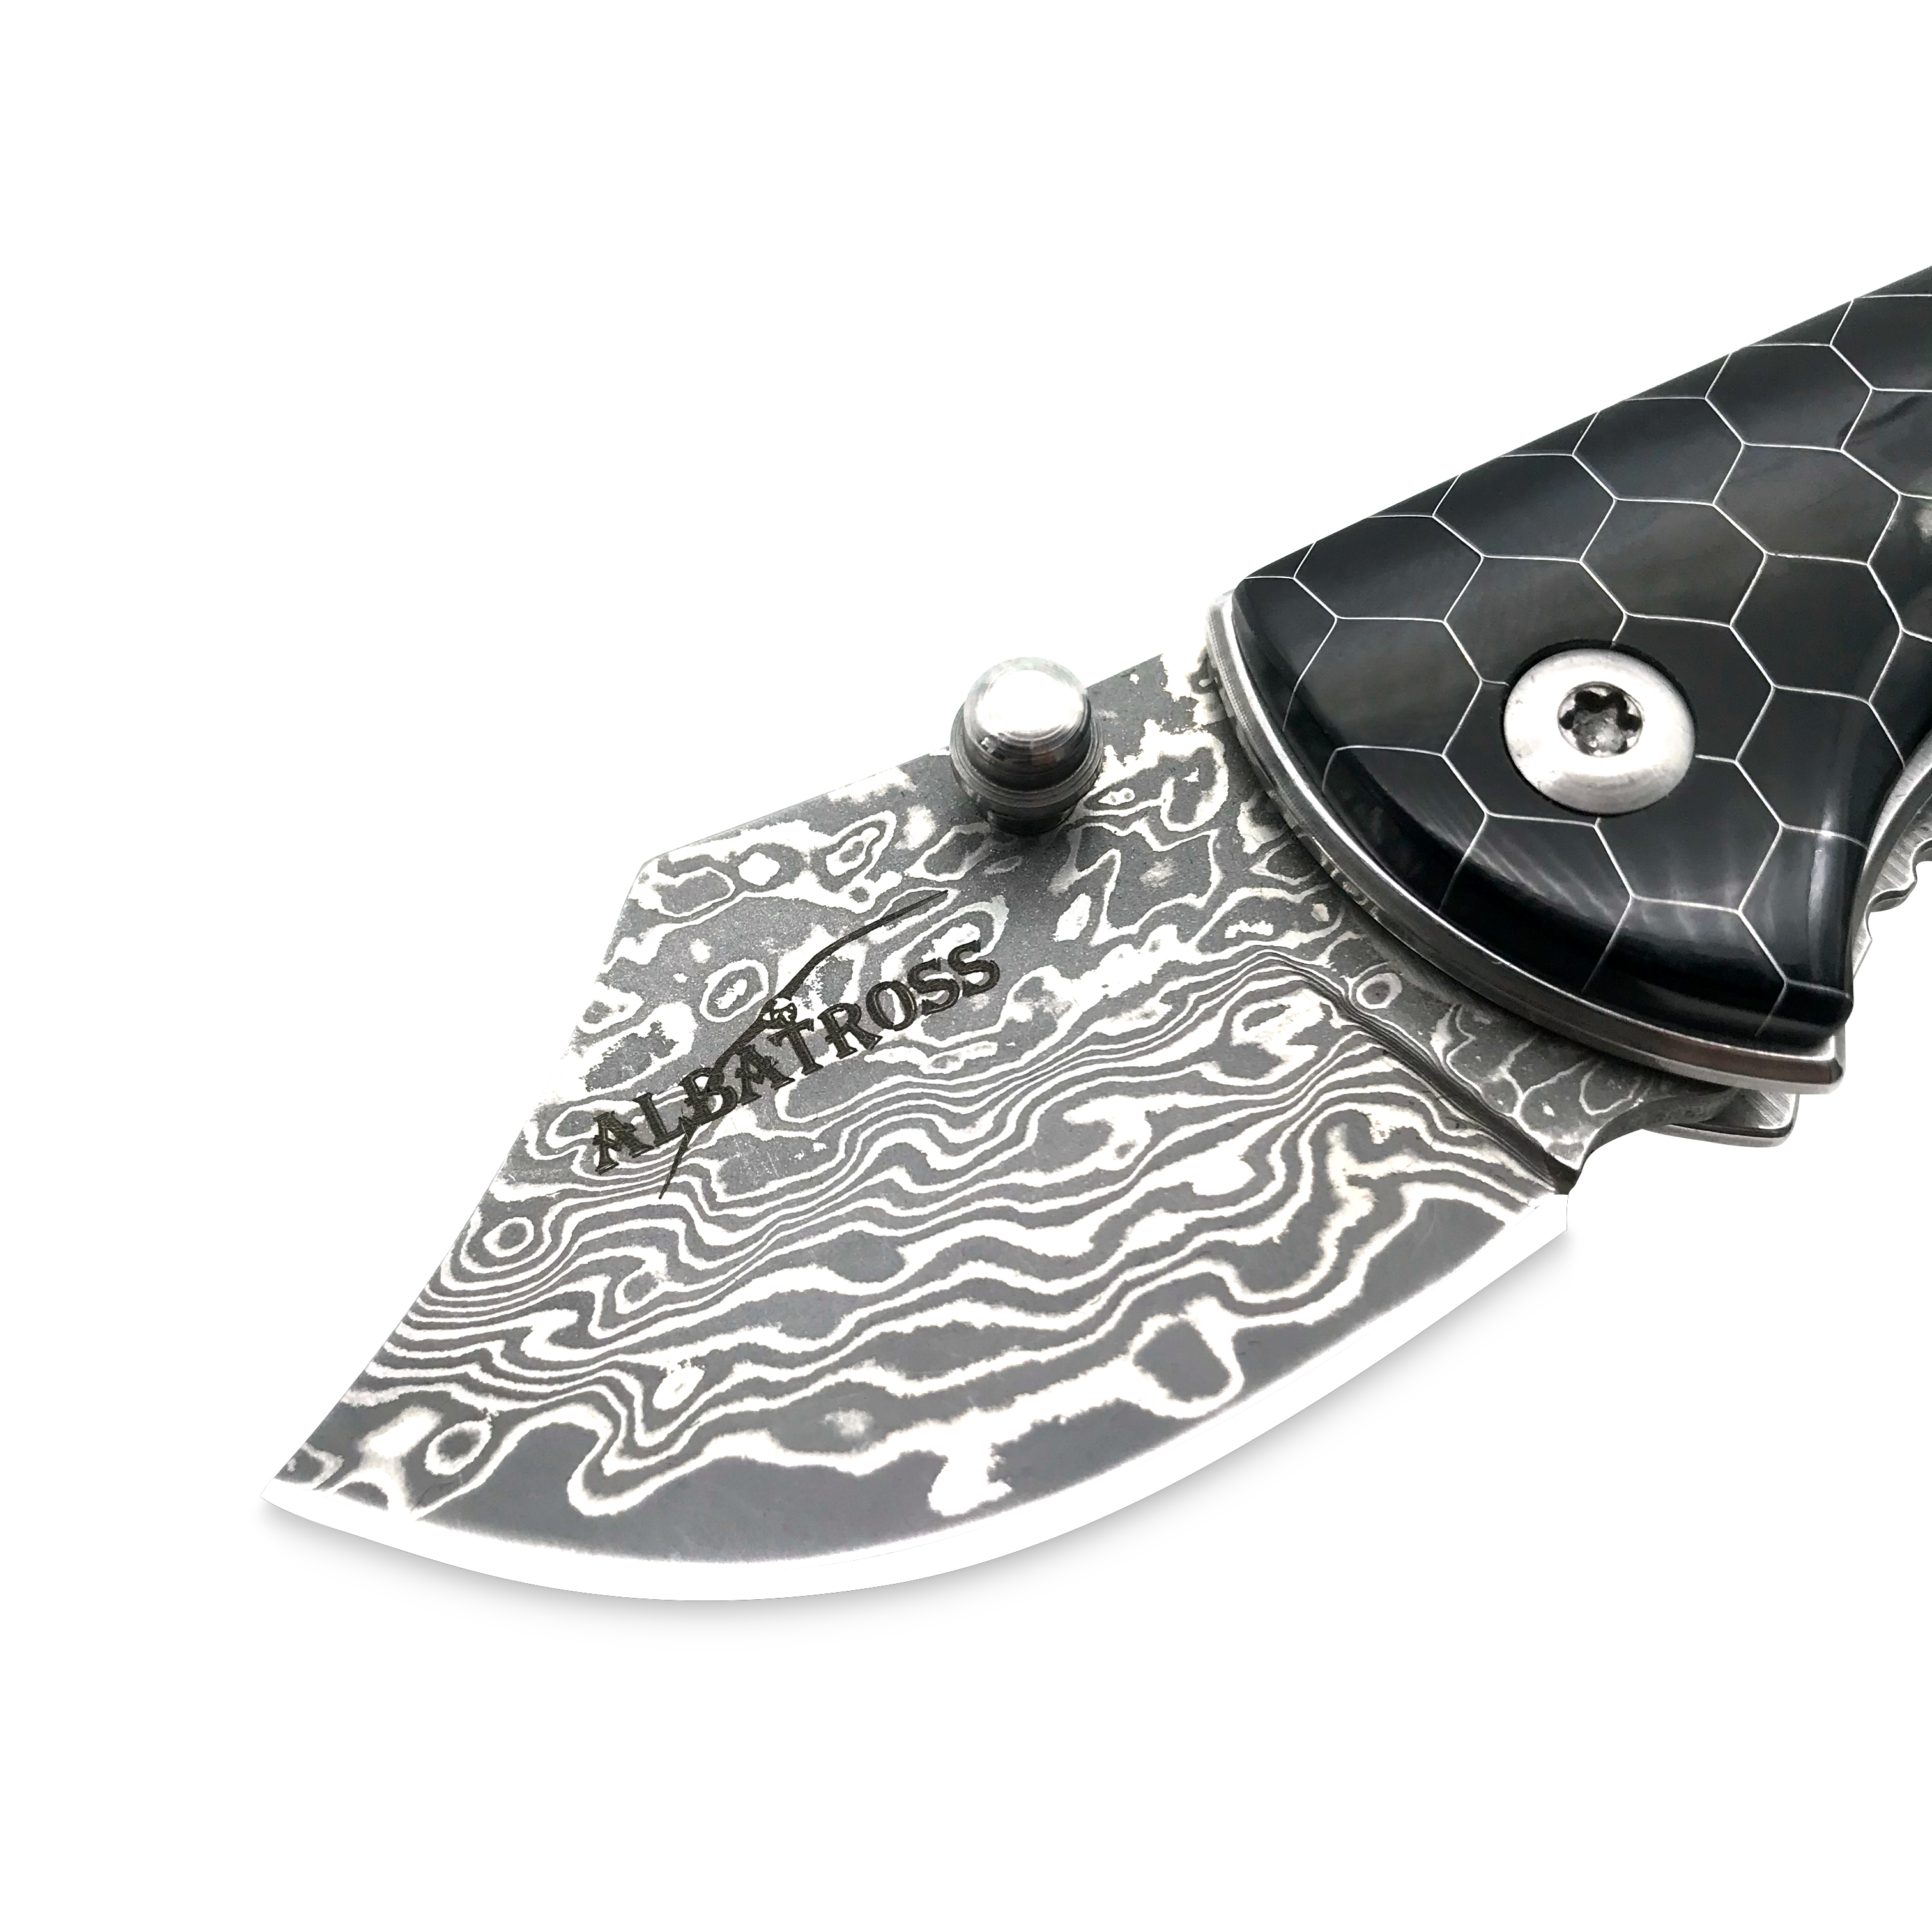 ALBATROSS HGDK022 EDC 1.75" Mini Black Resin Handle with Aluminum Mesh Honeycomb Pattern Camping Damascus Folding Pocket Knife